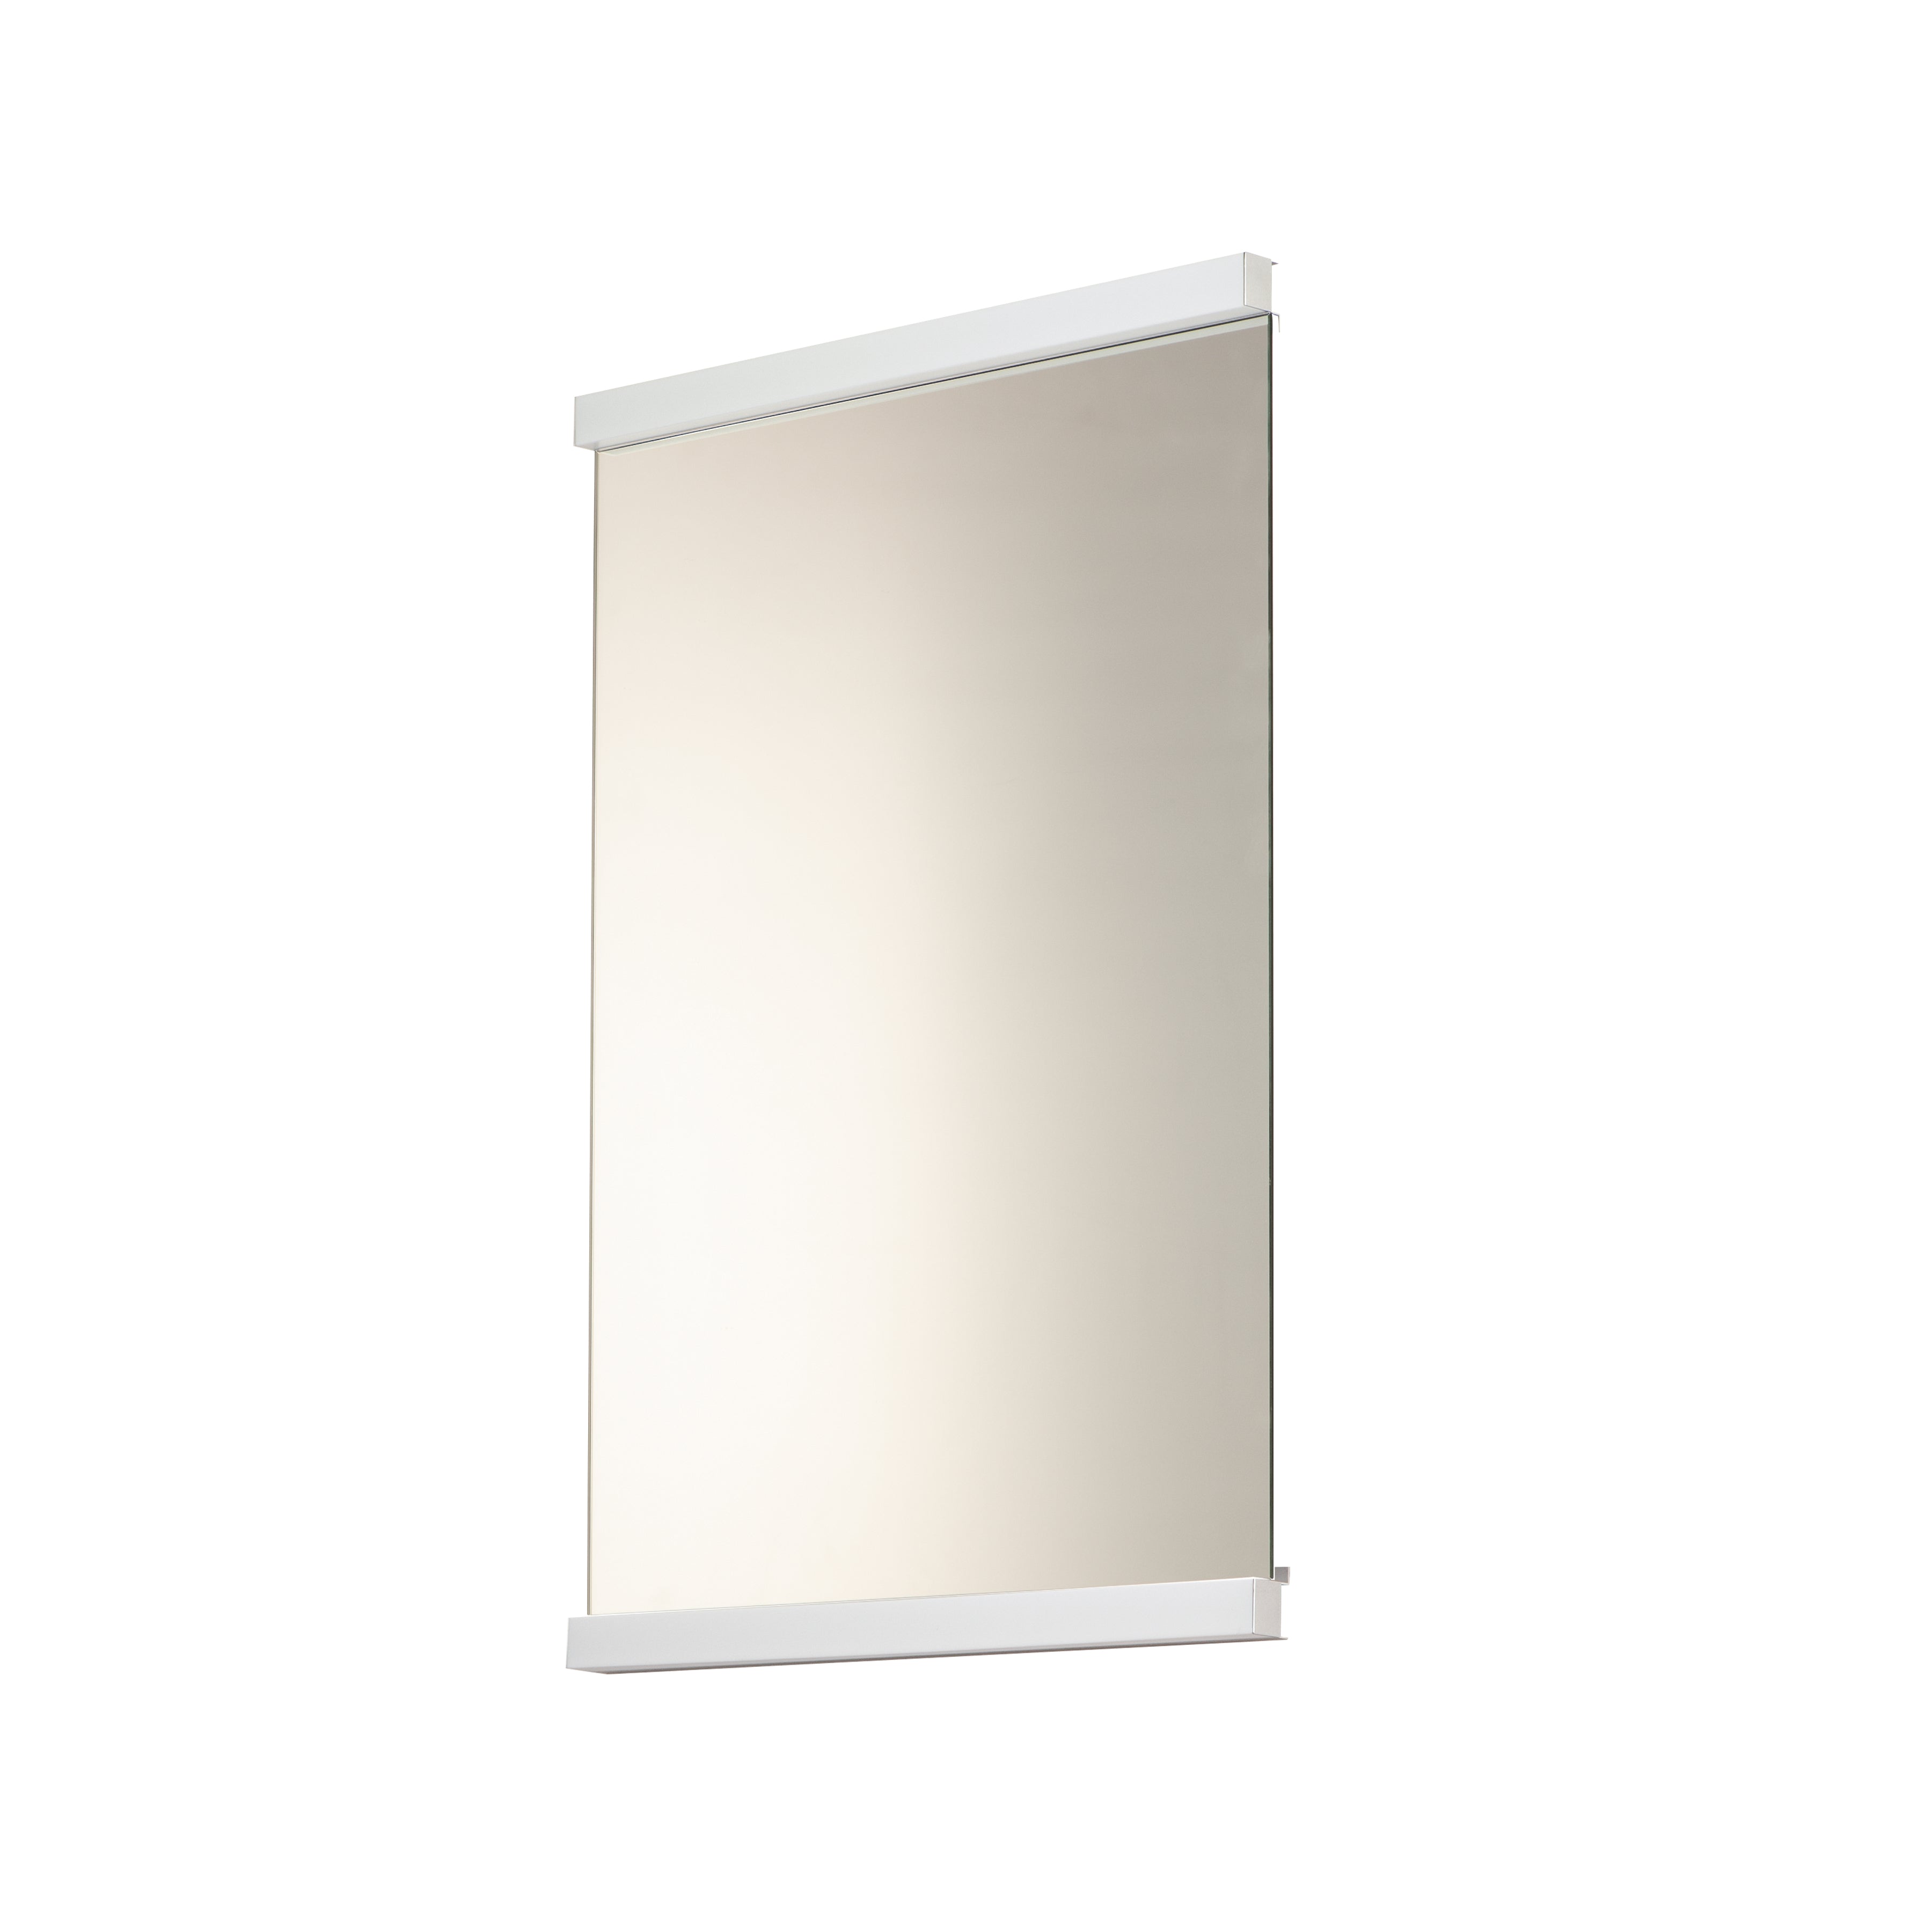 Luminance-LED Mirror Mirror ET2 0x32.75x24 Polished Chrome 